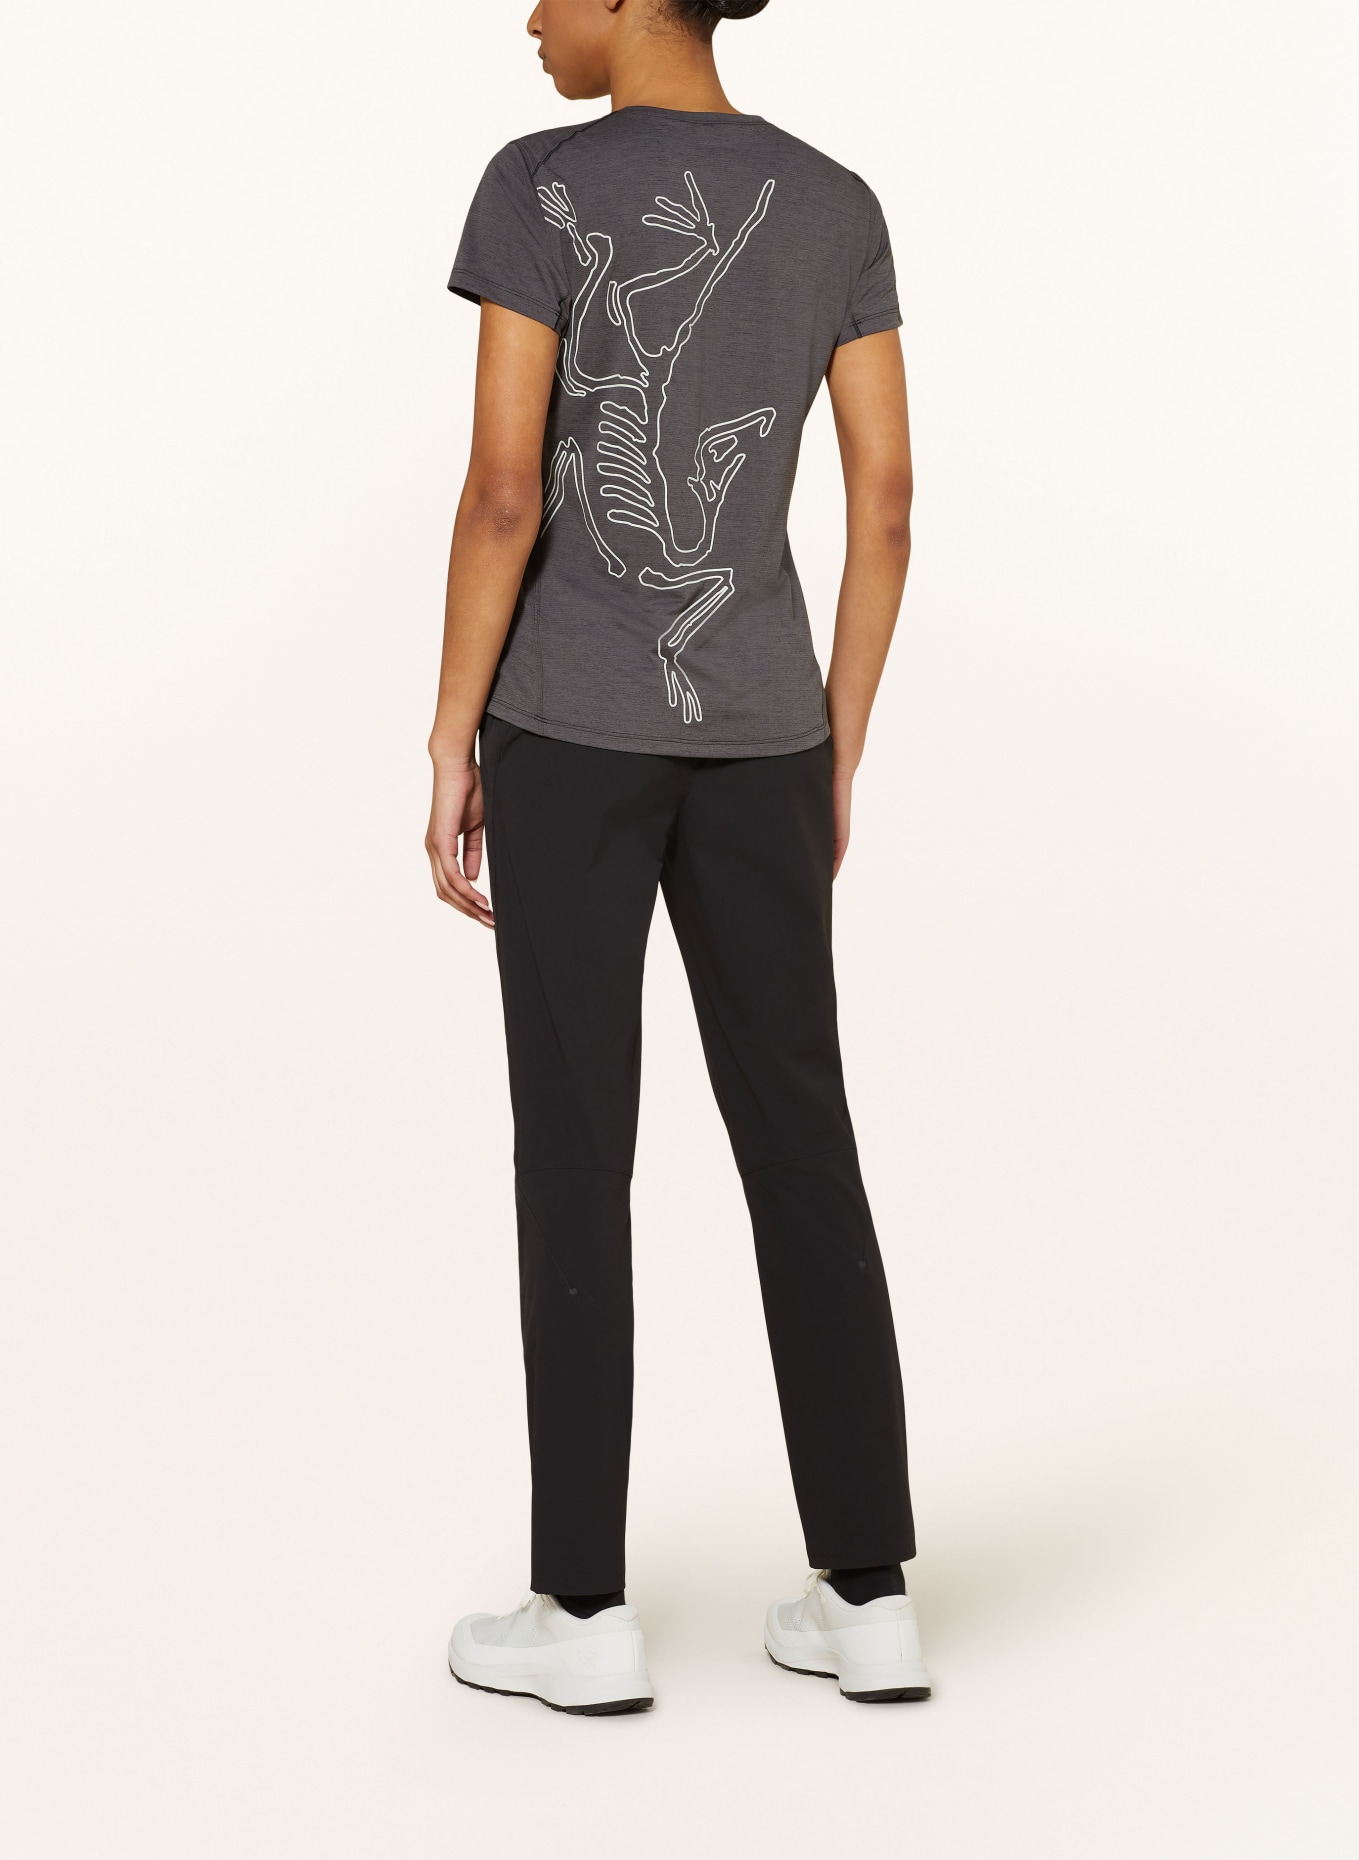 ARC'TERYX T-shirt TAEMA ARC‘BIRD, Color: DARK GRAY/ LIGHT GRAY (Image 3)